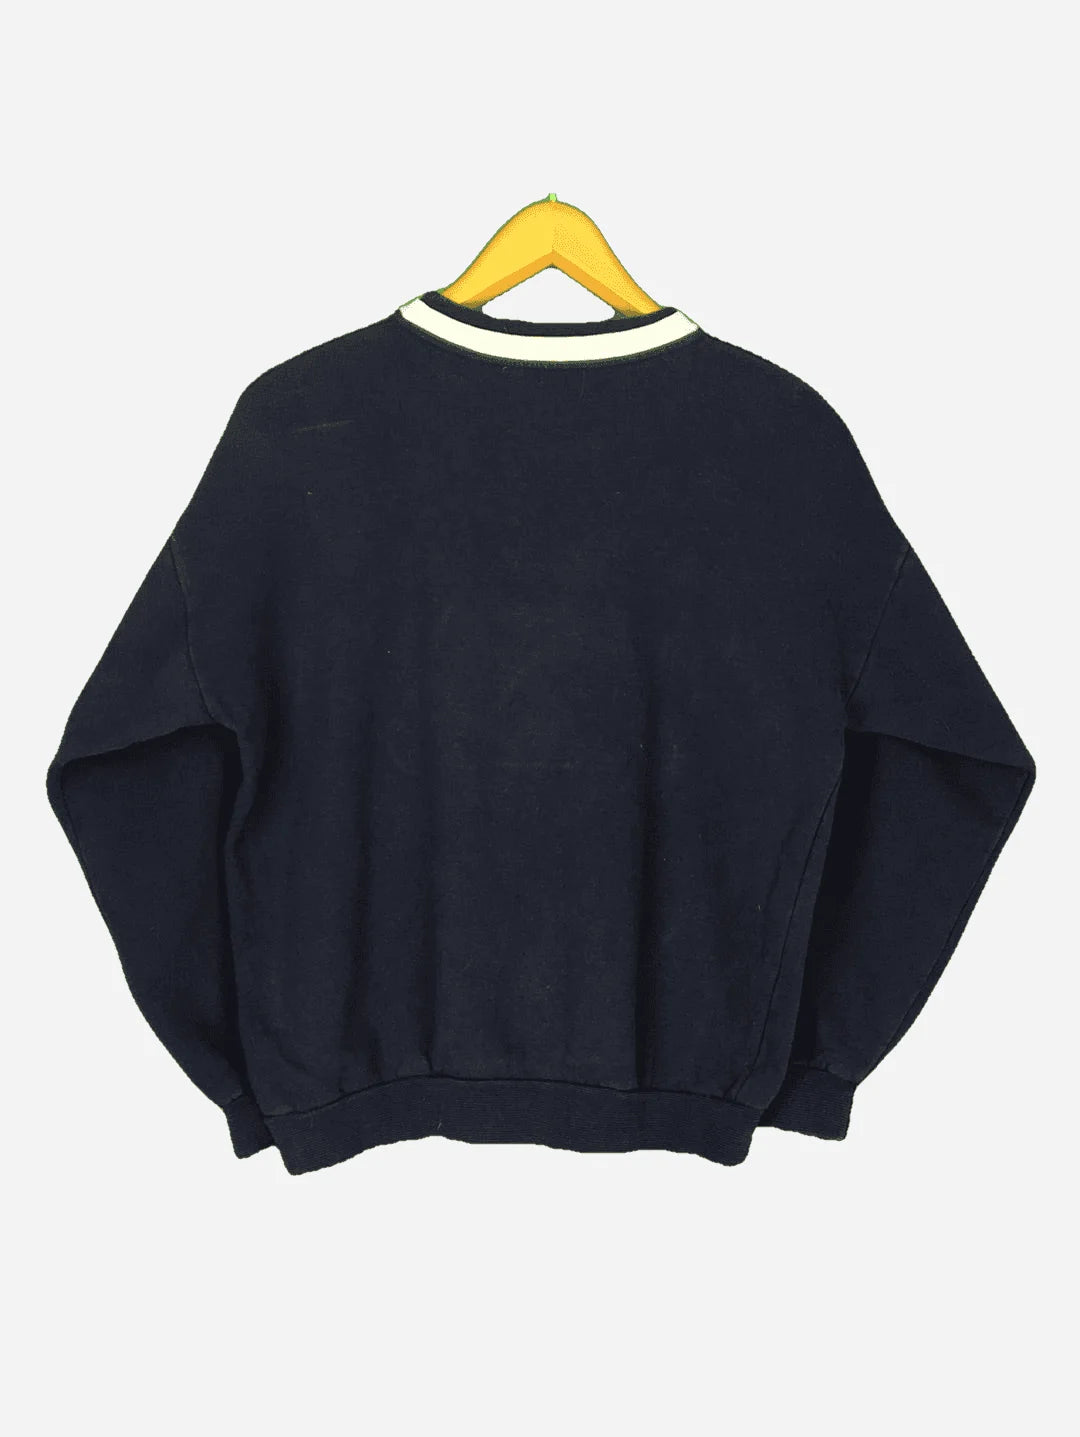 Fila Sweater (XS)